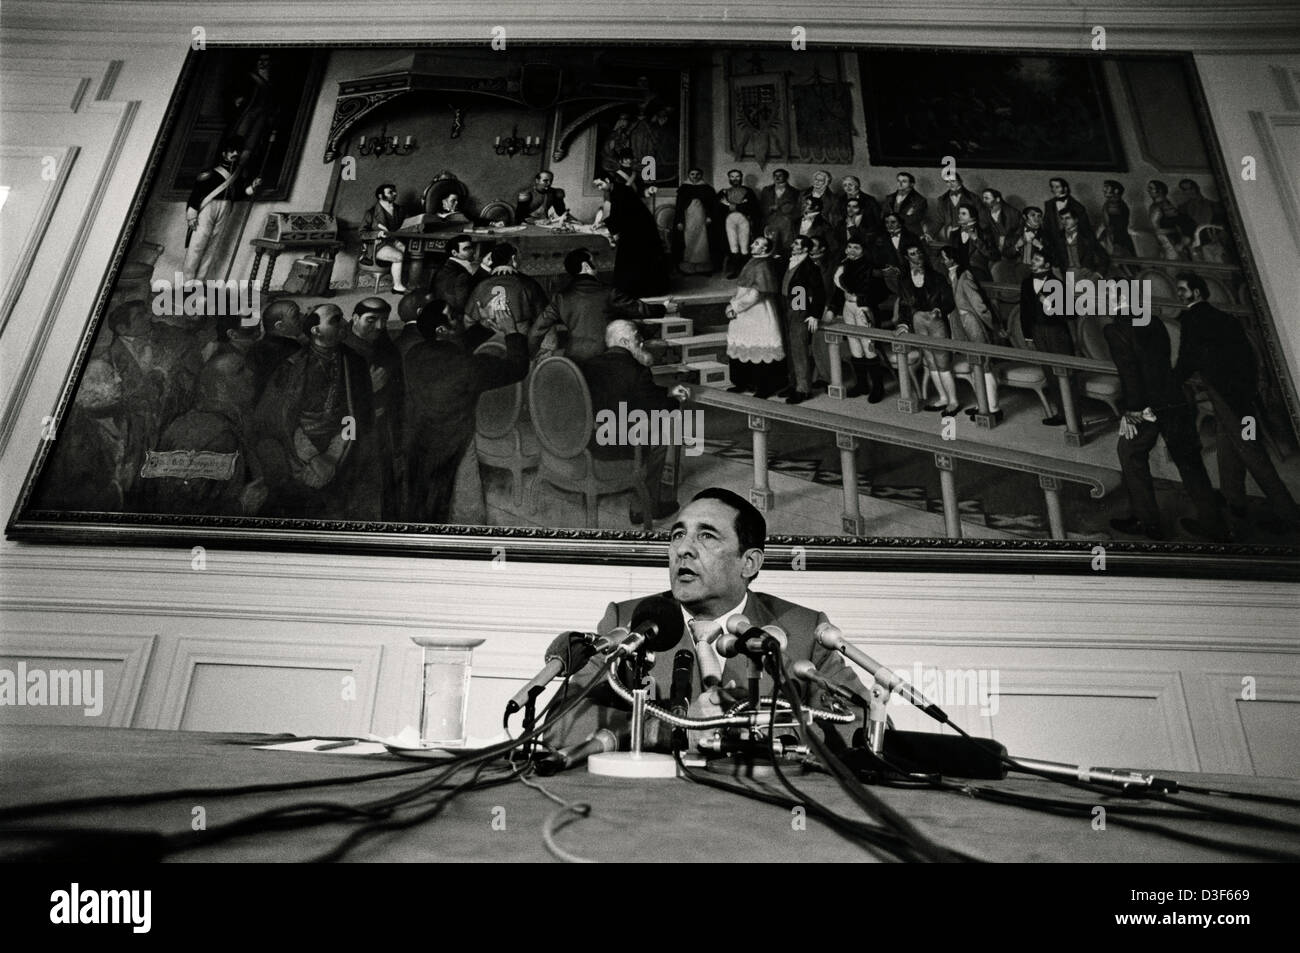 EL SALVADOR, March 1982: President José Napoleón Duarte Fuentes giving a press-conference shortly before he lost power. Stock Photo